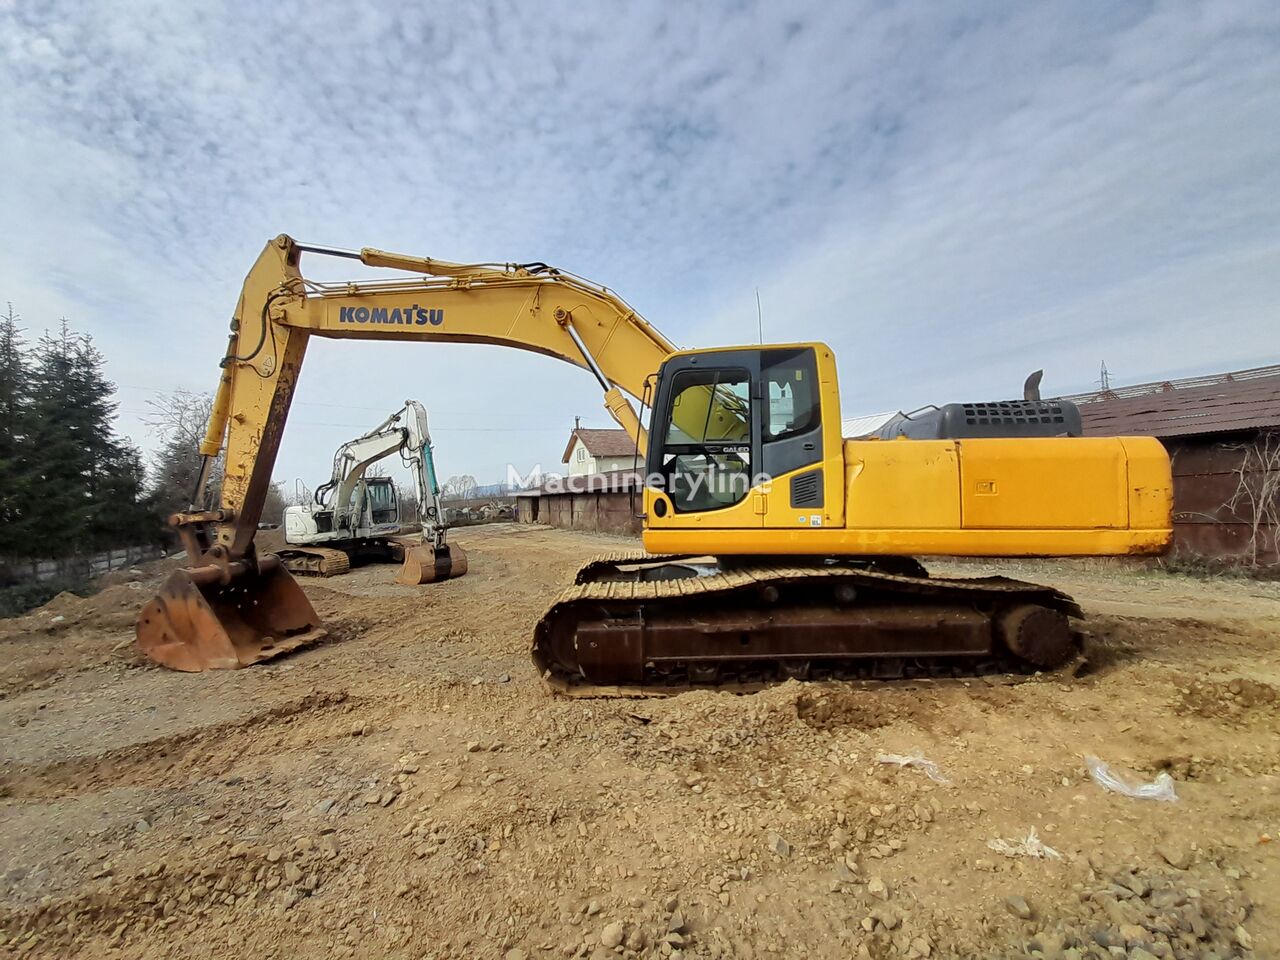 Komatsu 350 NLC tracked excavator